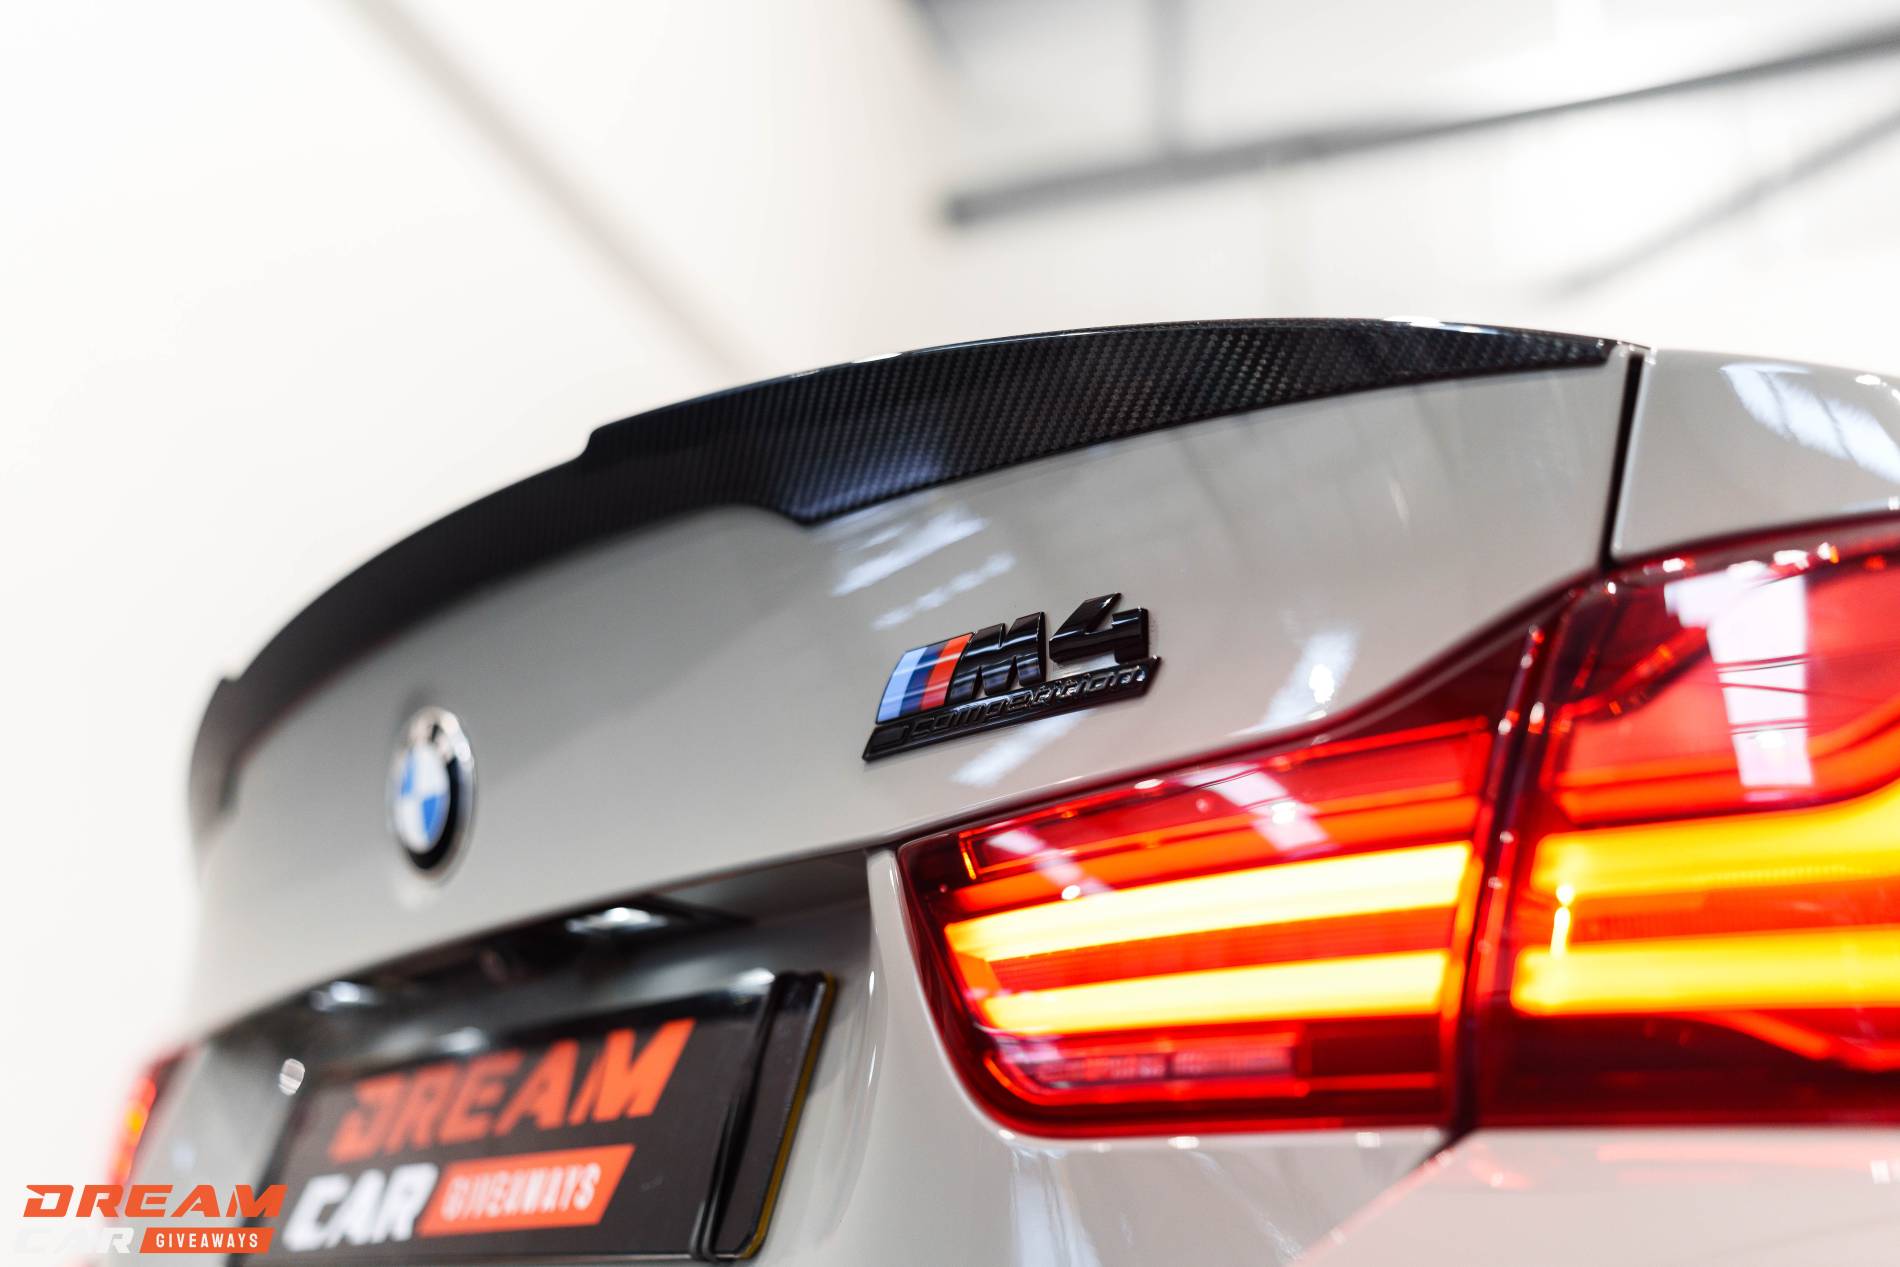 2020 BMW M4 & £1,000 or £31,000 Tax Free